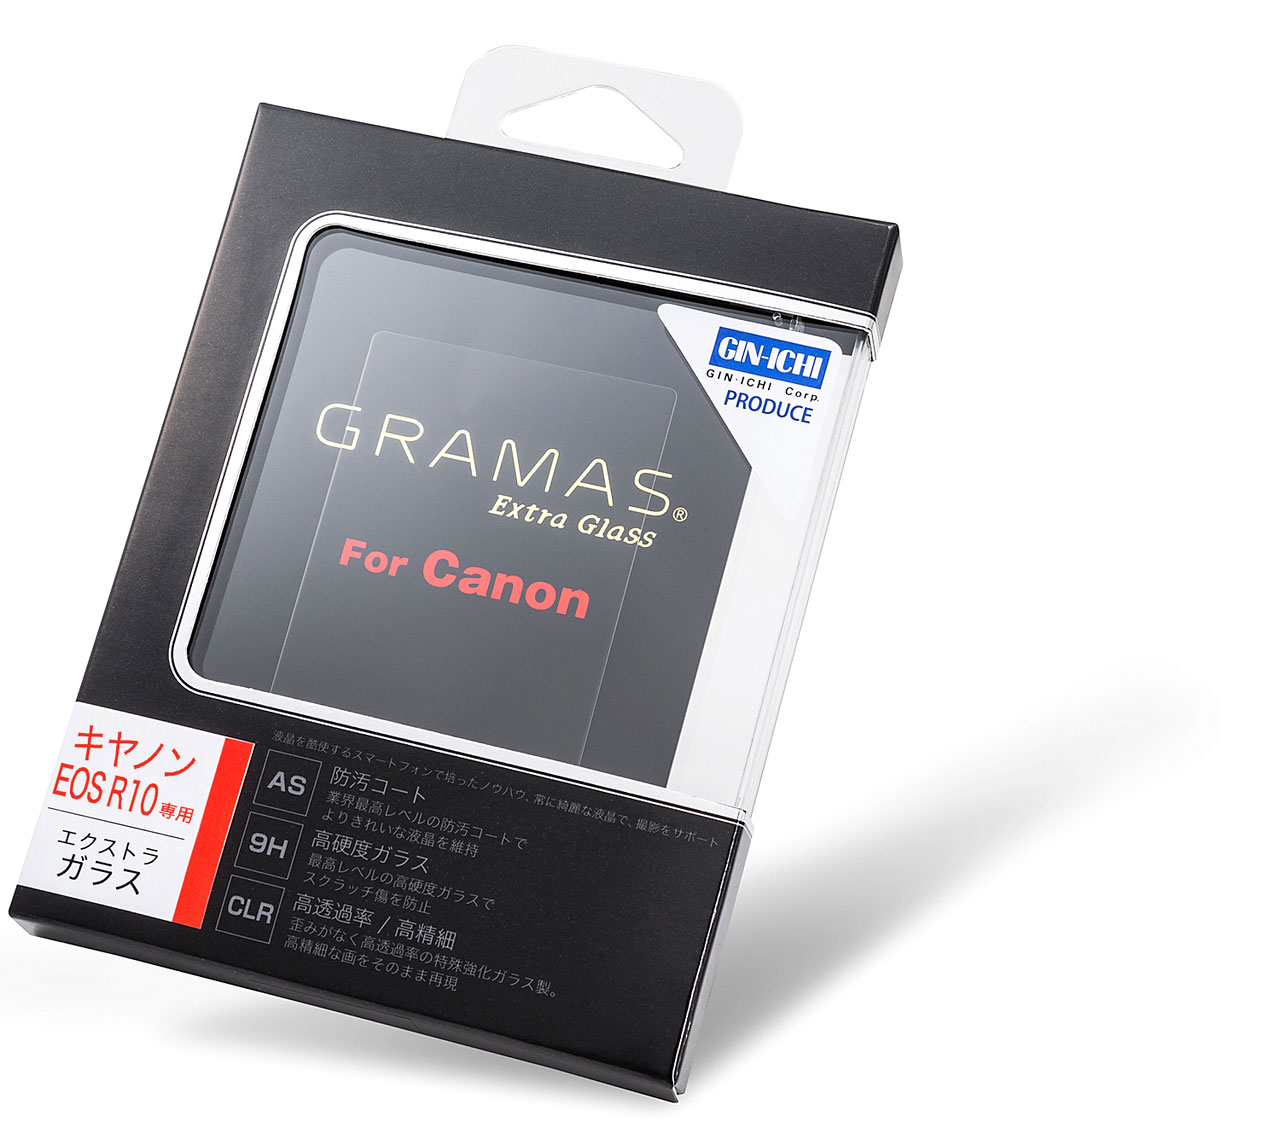 GIN-ICHIxGRAMAS Extra Glass for Canon EOS R10キヤノン イオスR10ハイエンドデジタルカメラ用9H超硬度液晶保護ガラス 02P05Nov16